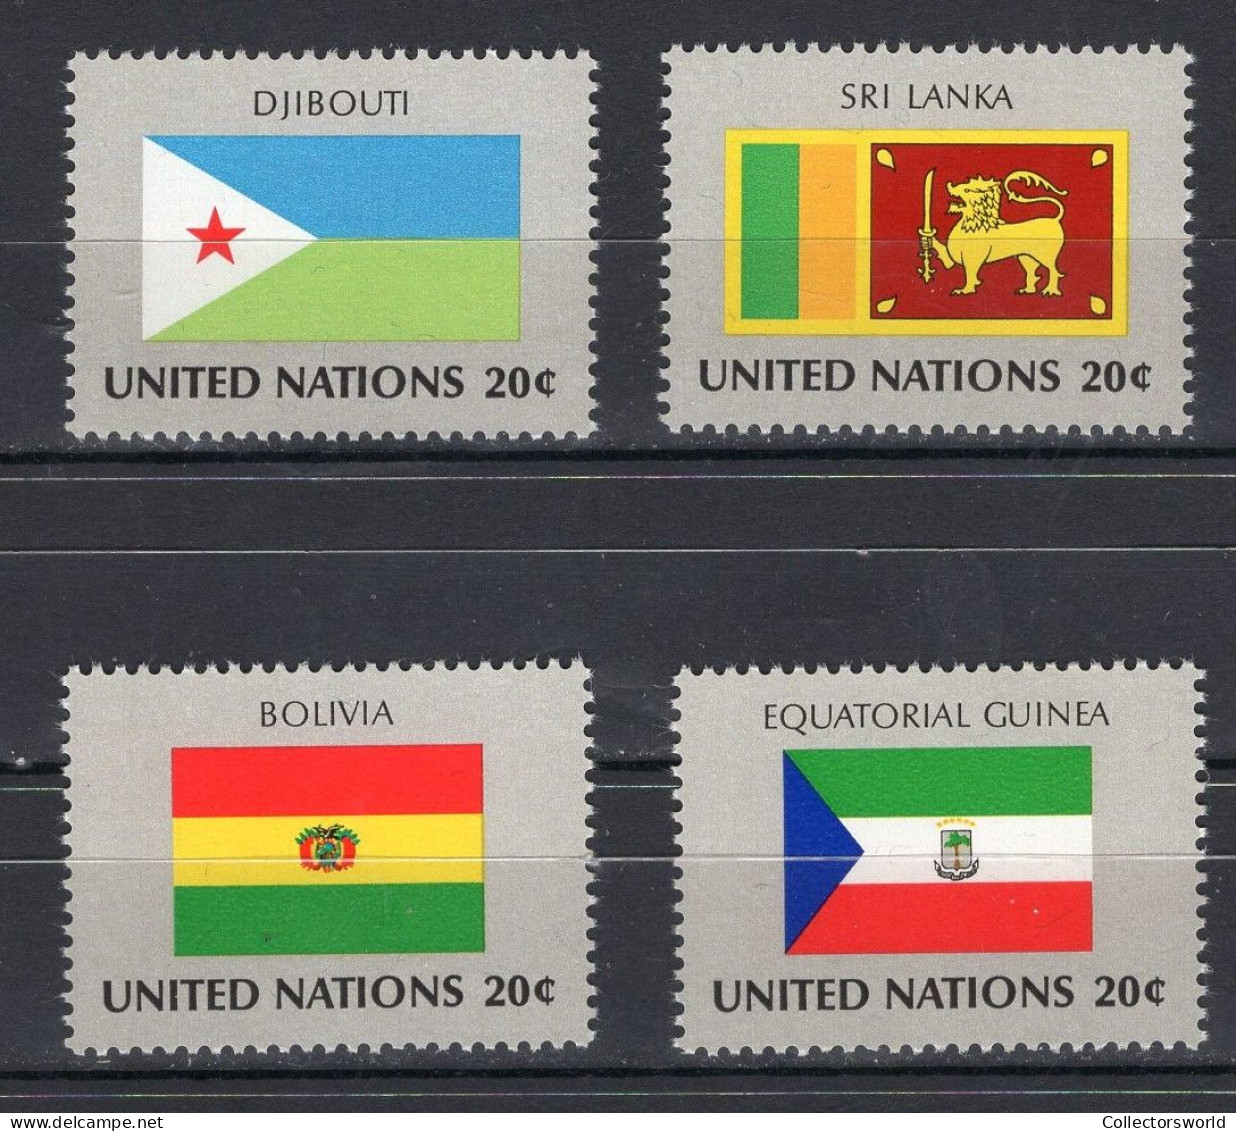 United Nations UN New York Serie 4v 1981 Flag Serie Sri Lanka Djibouti Bolivia Equatorial Guinea MNH - Neufs